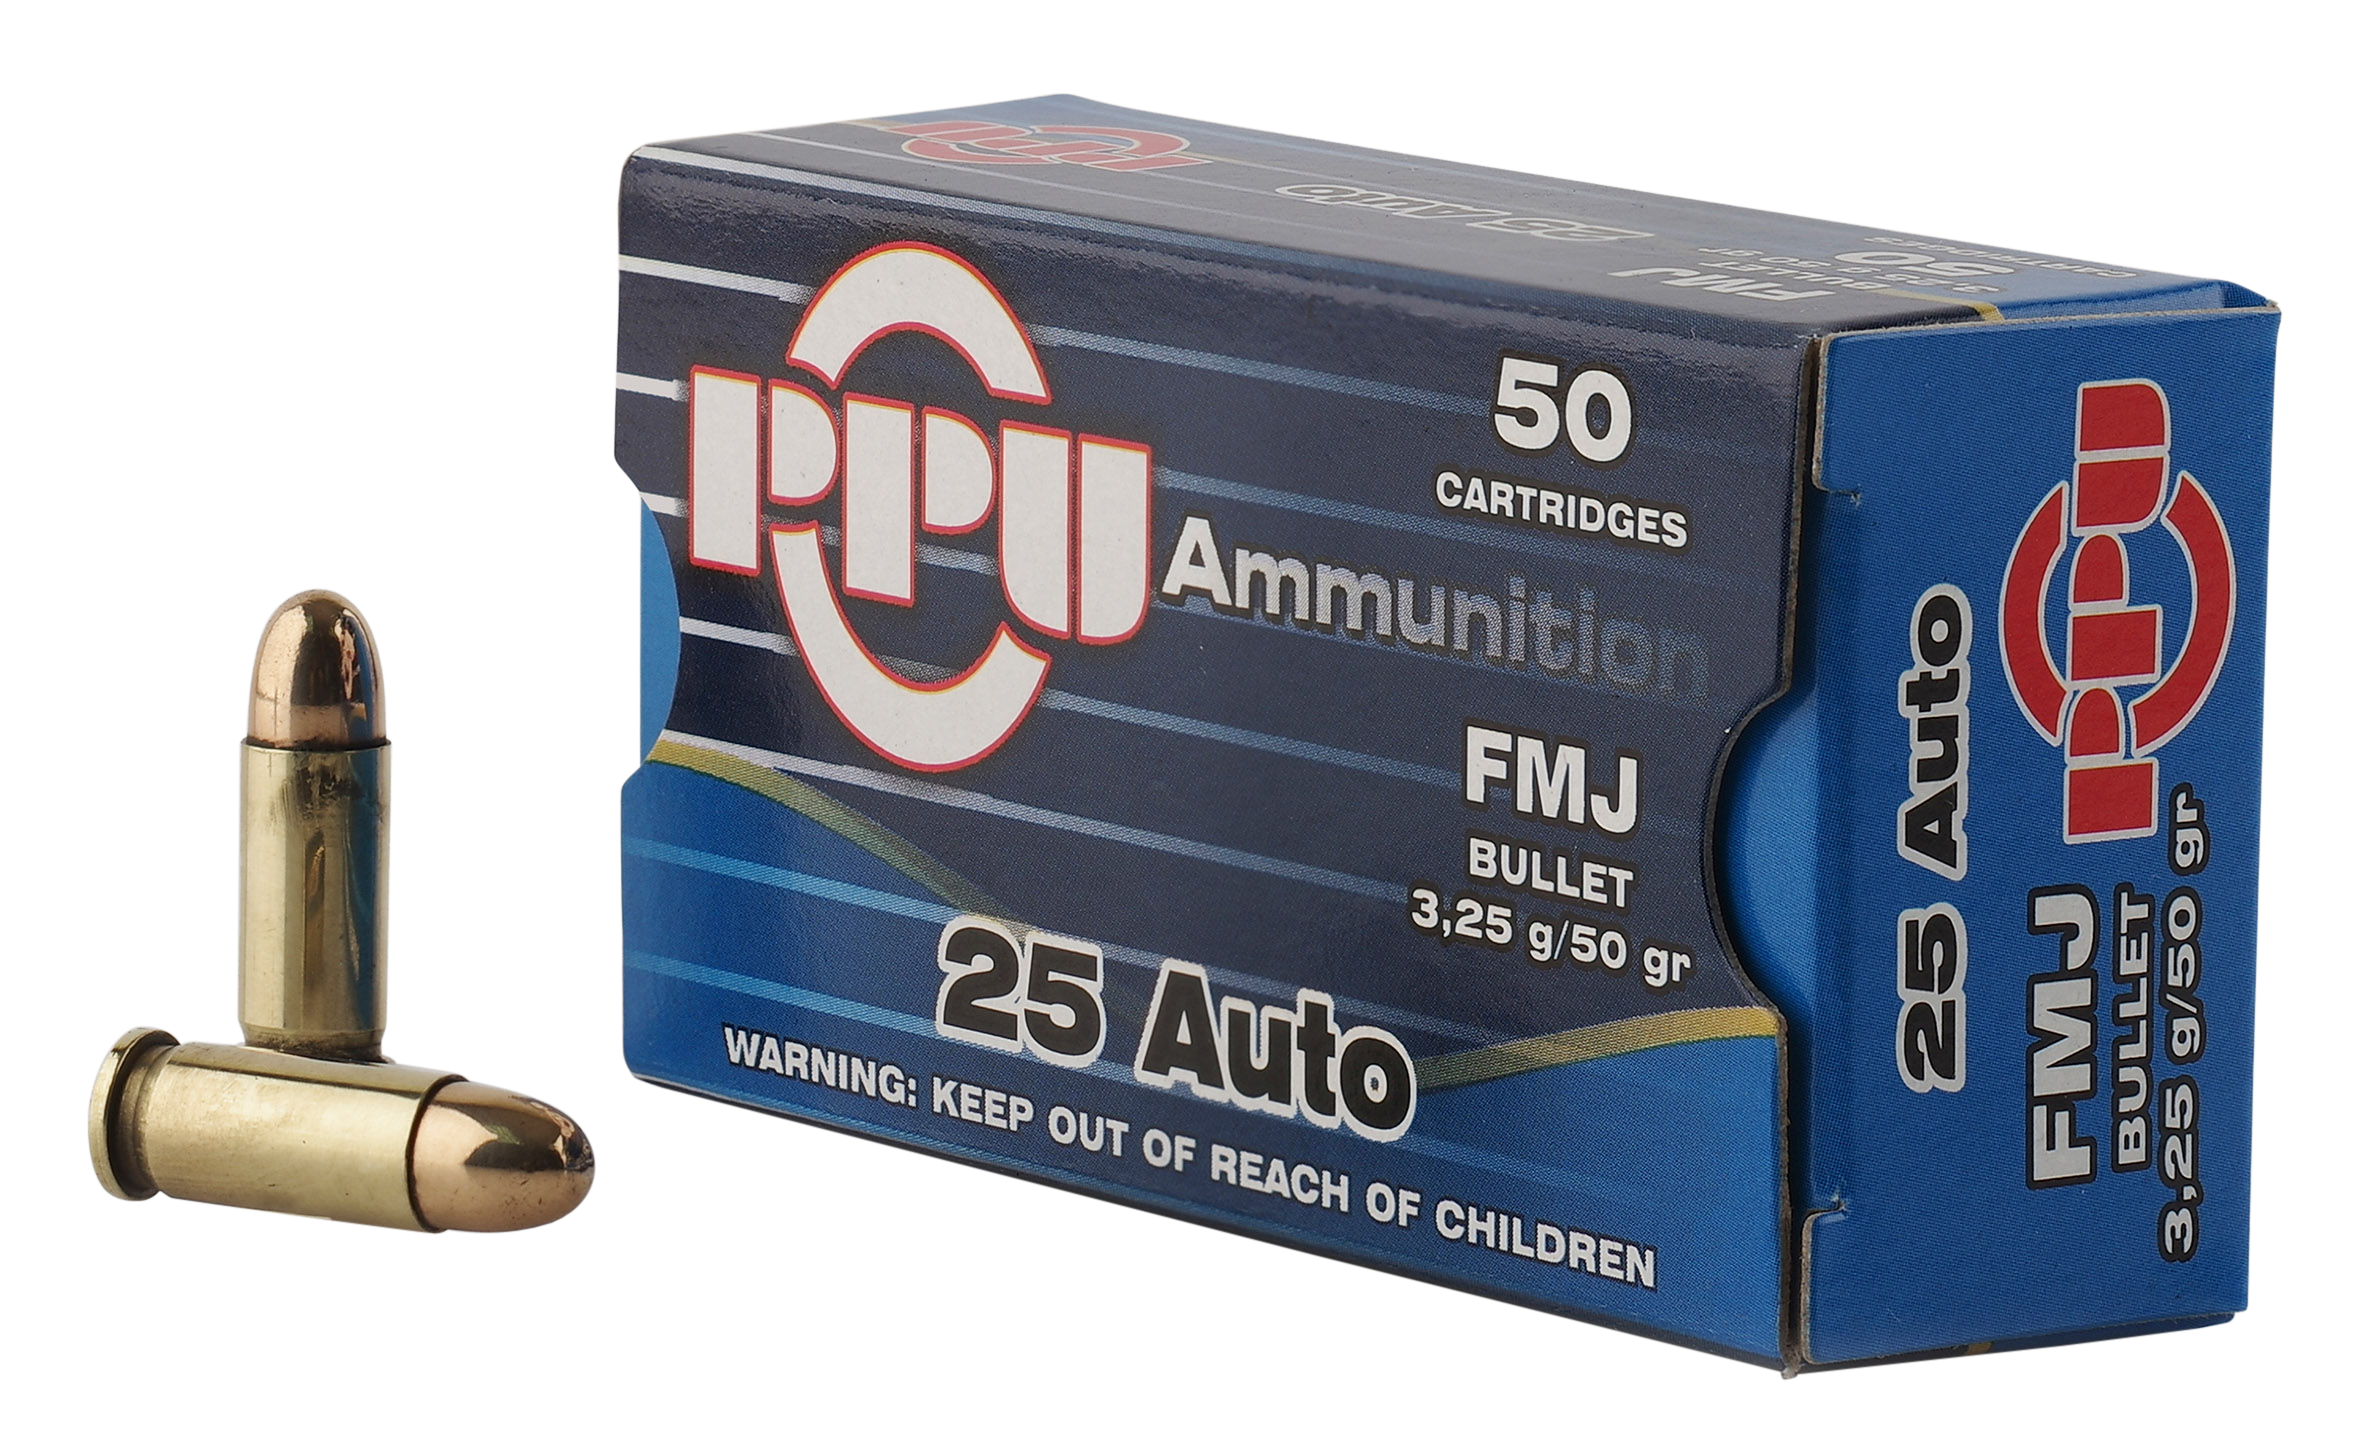 PPU Automatic Colt FMJ Ammo